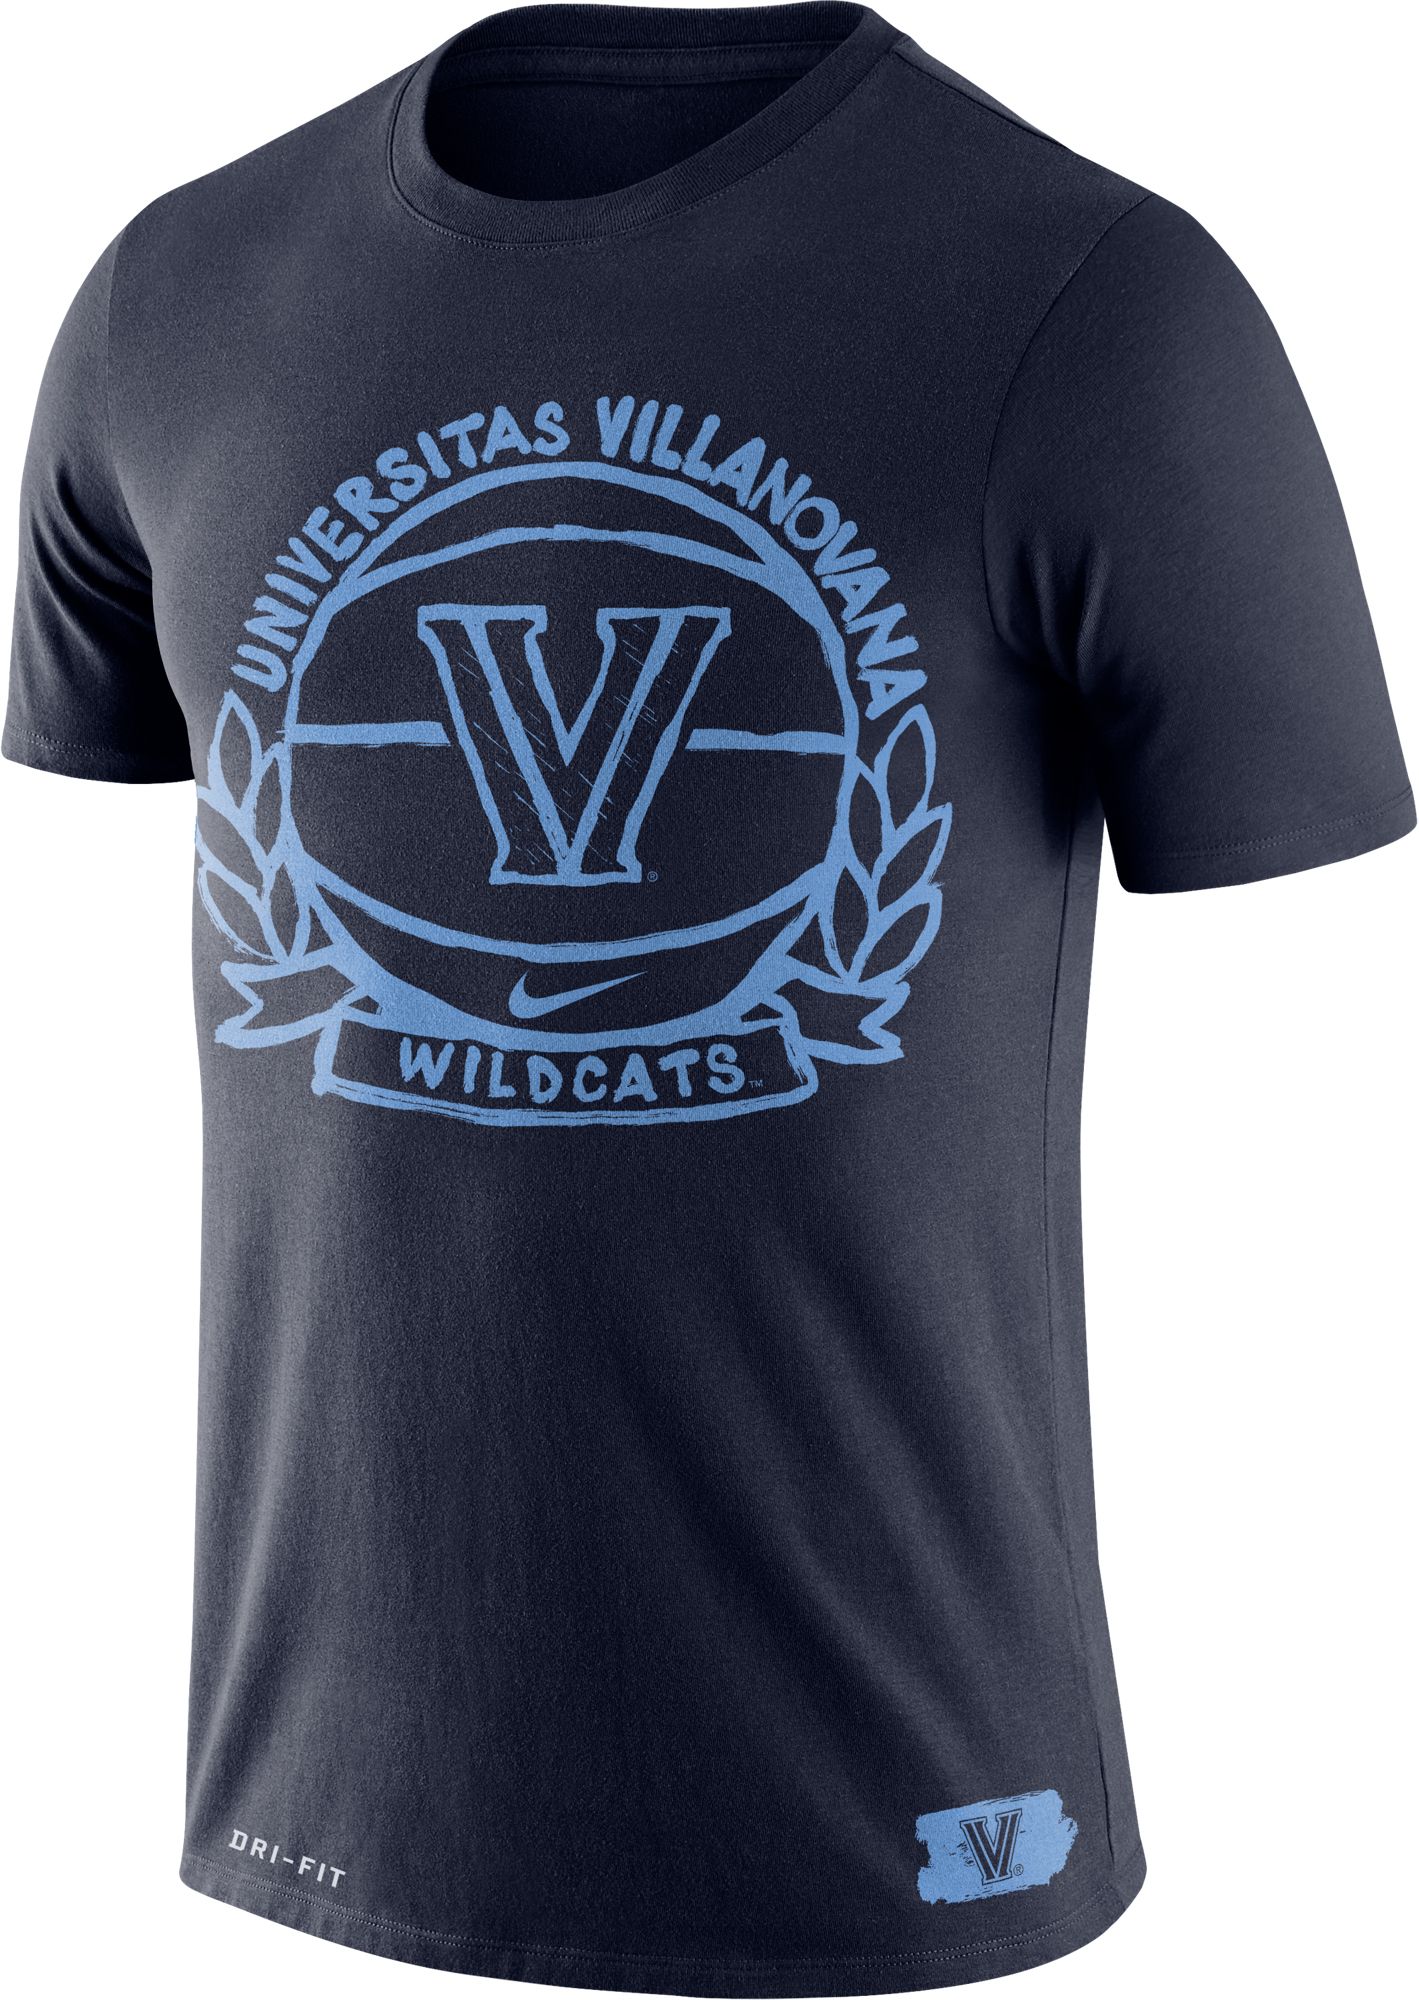 villanova wildcats jersey